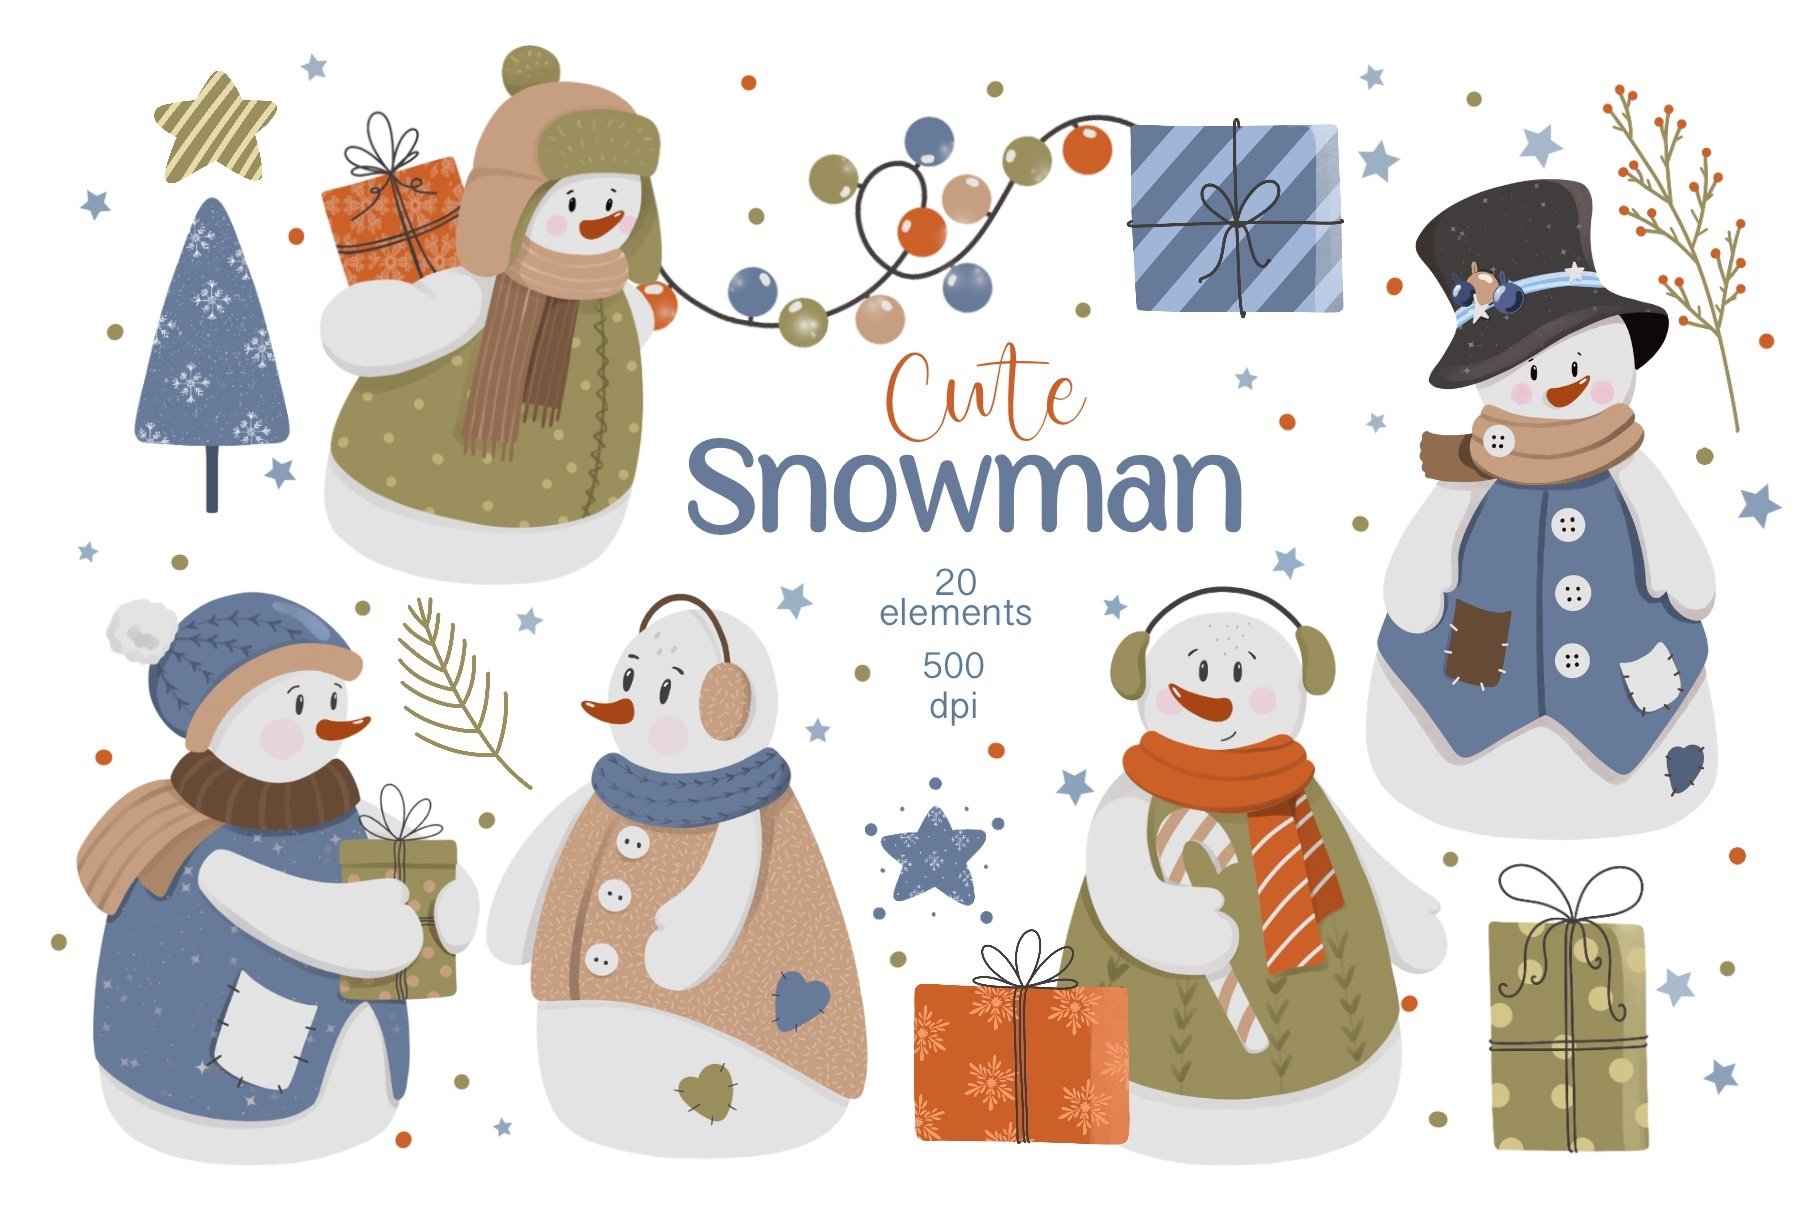 Build a Snowman Clipart, Snow Day Clip Art, Christmas, Make a